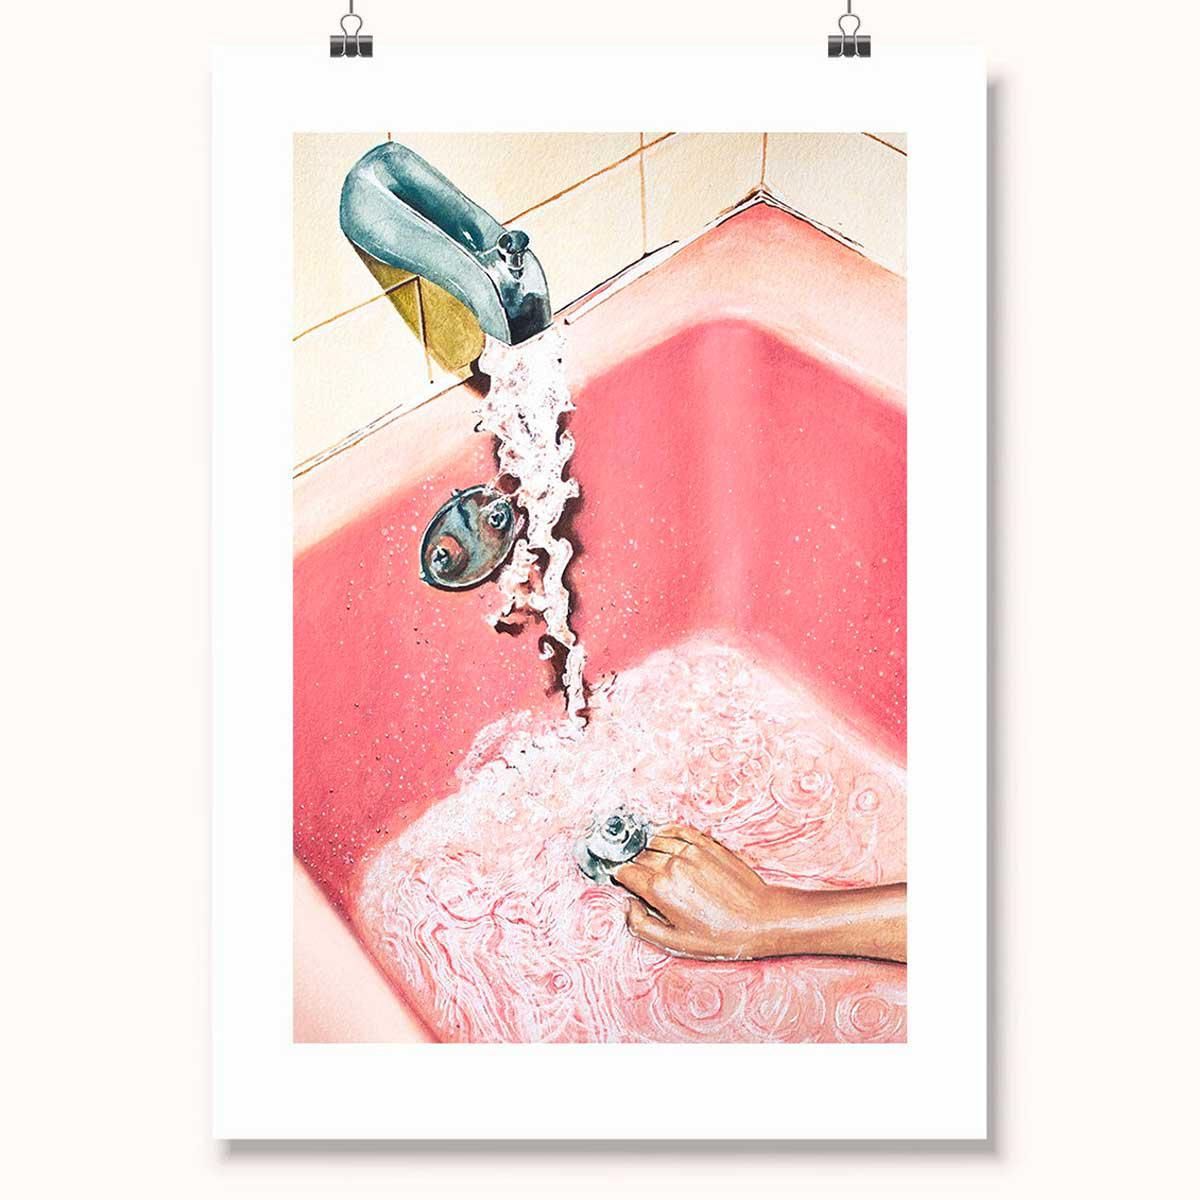 julia ockert vintage pink bathroom art print